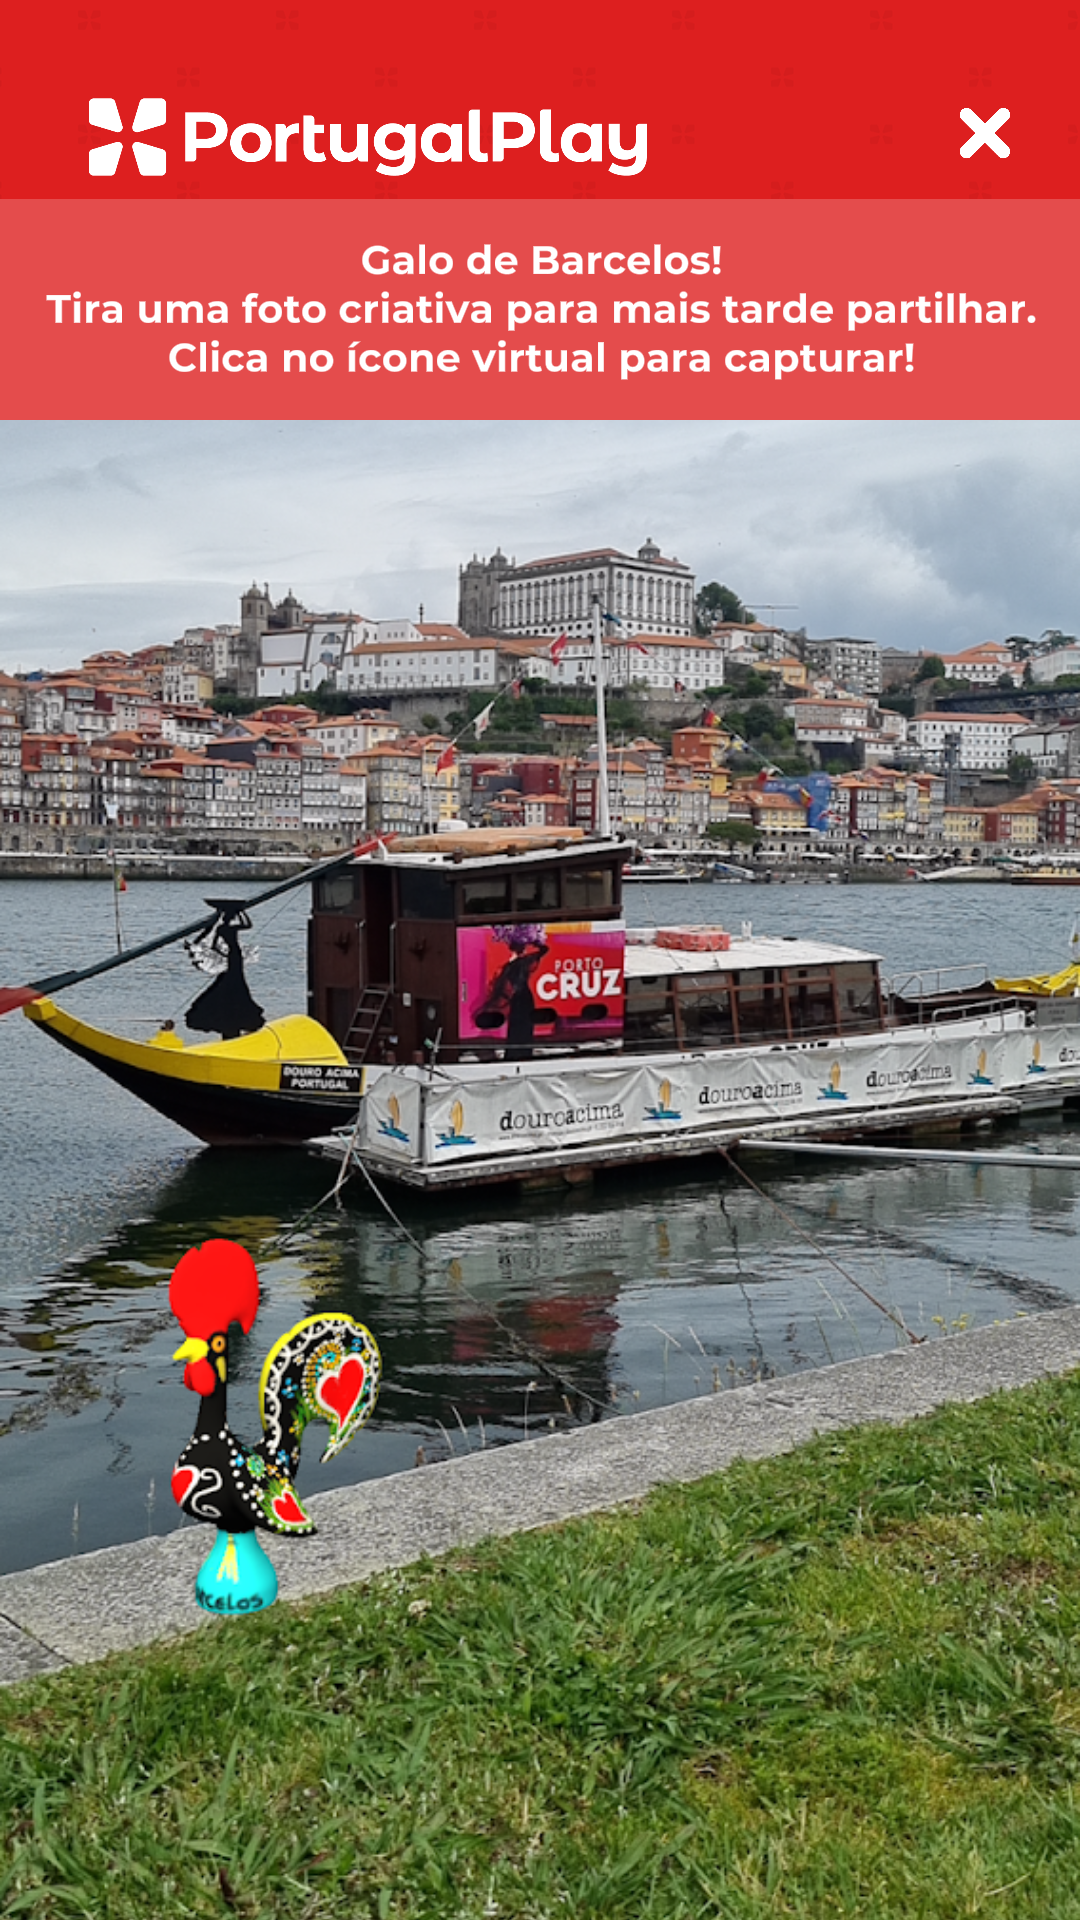 Portugal Play no Porto